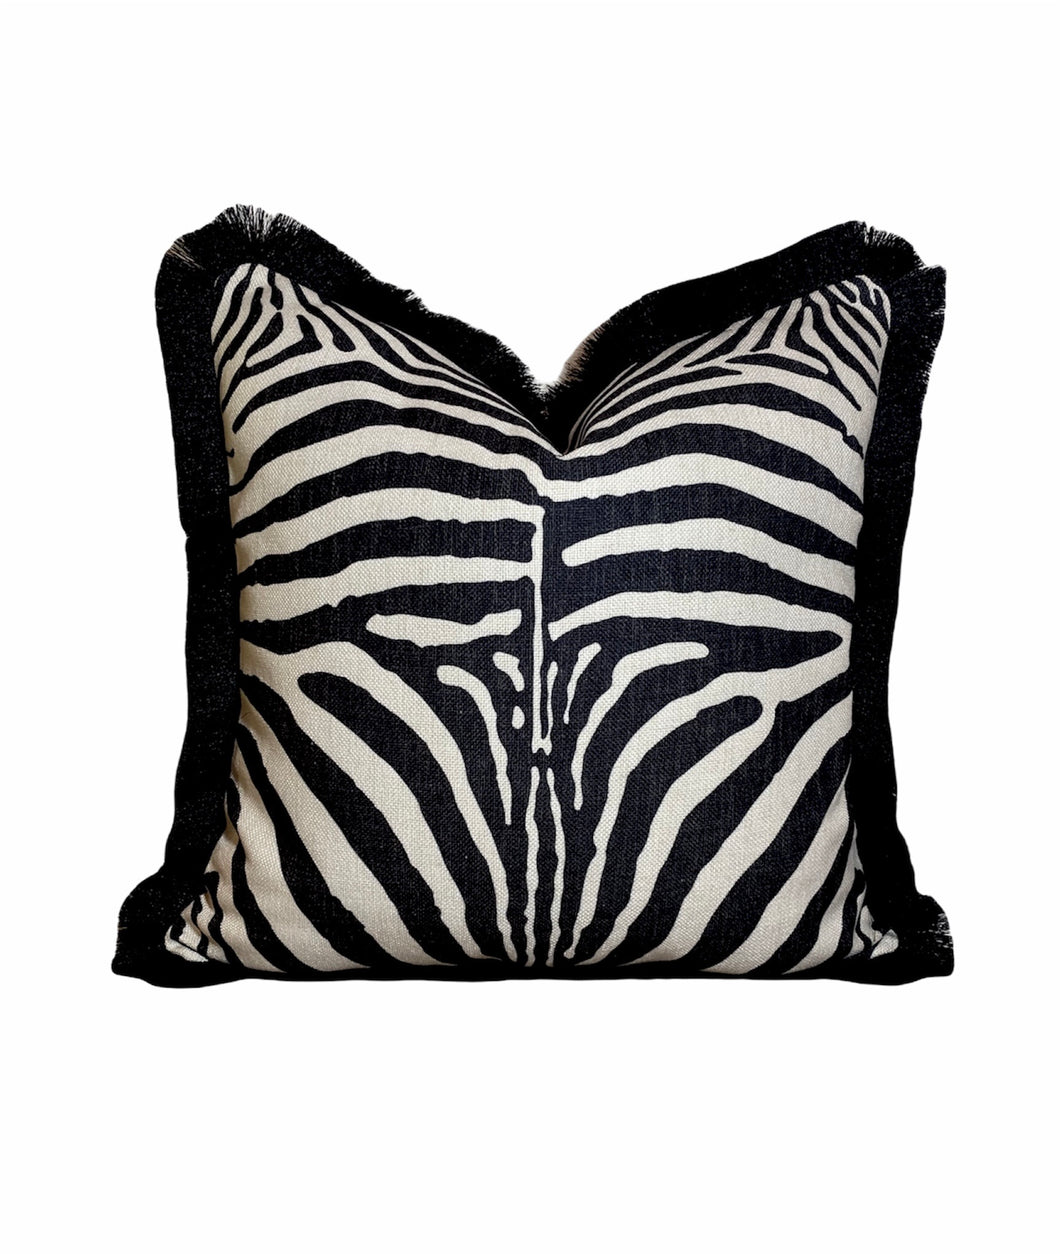 Zebra Animal Print Black and White Linen Black Fringe Cushion Cover Pillow Rustic